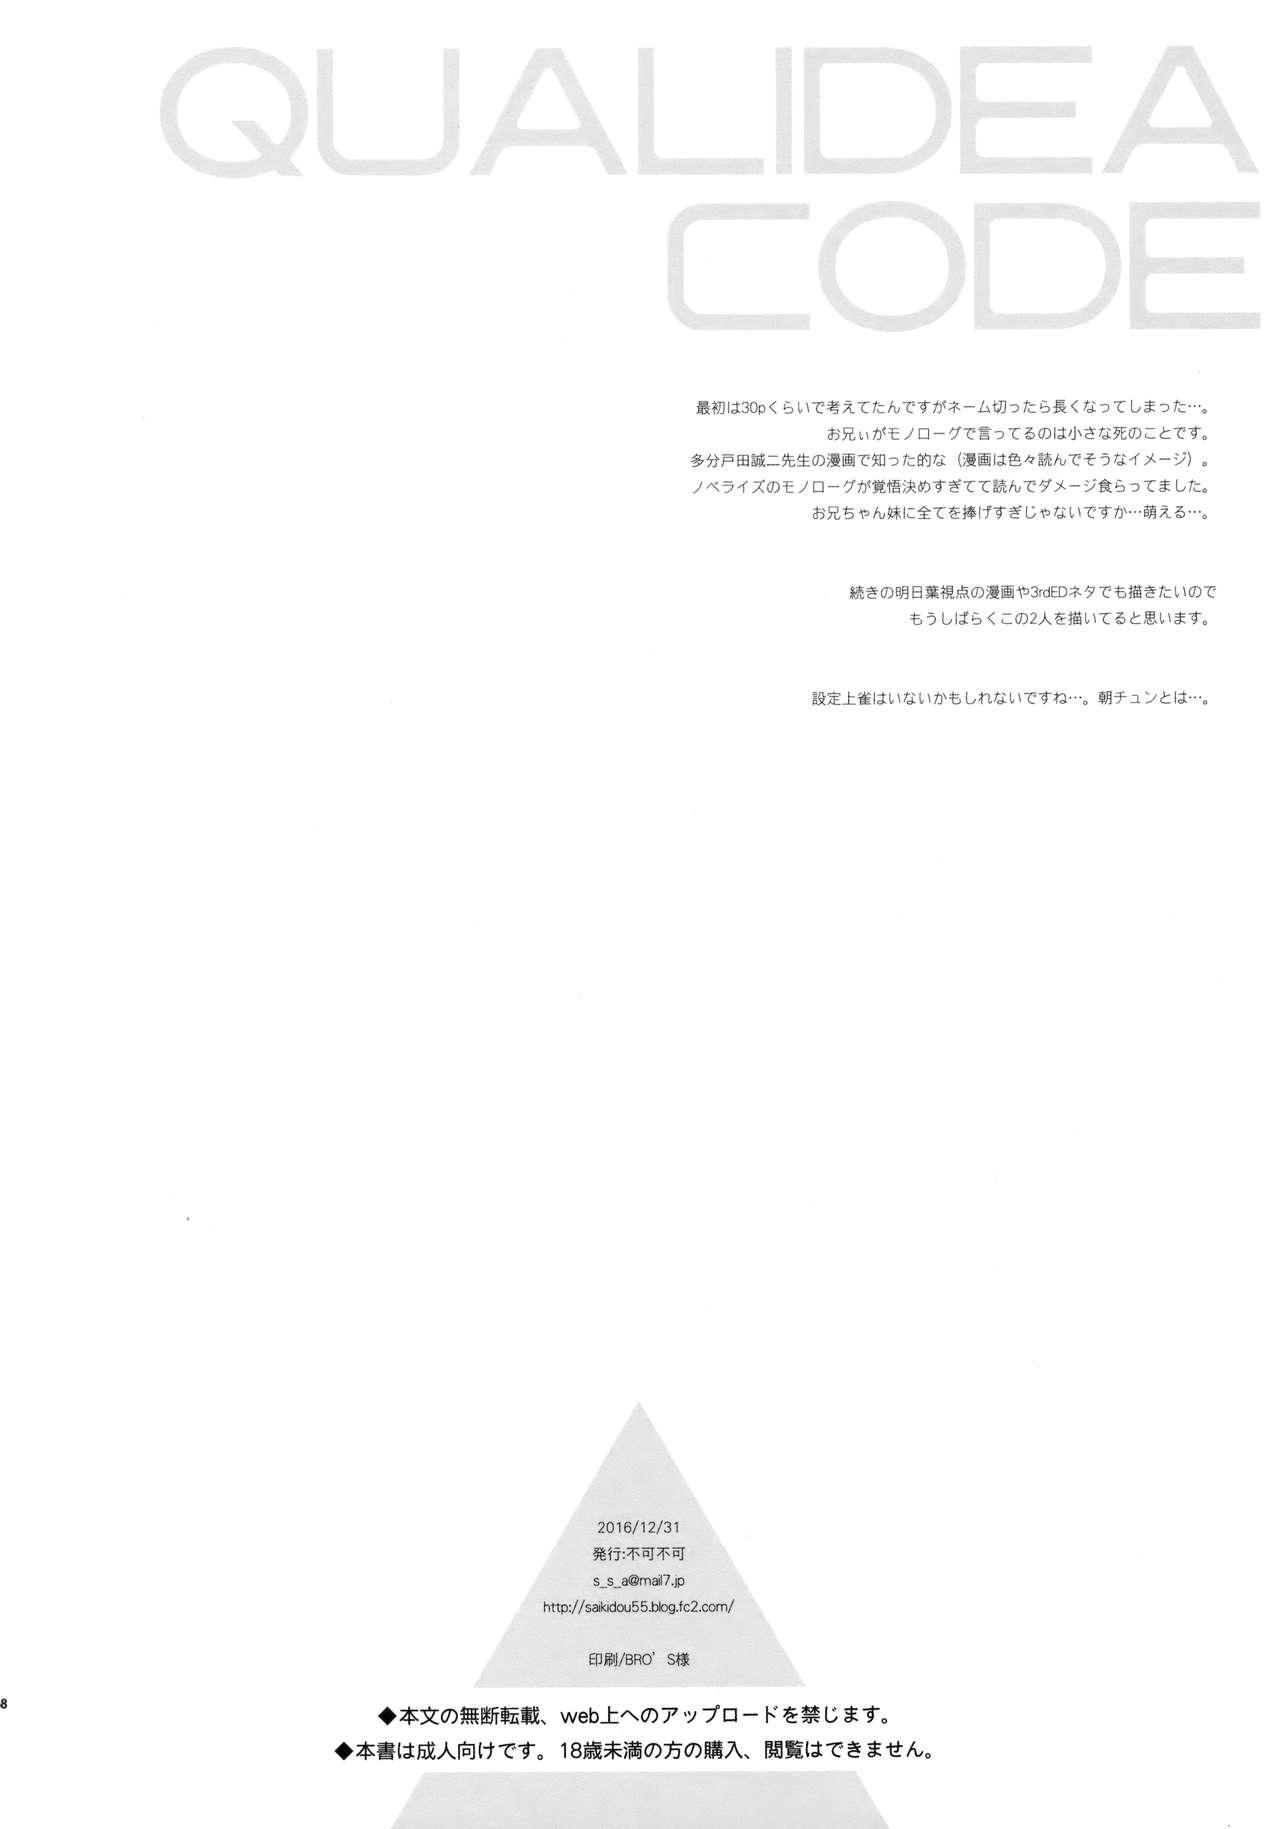 Hidden Camera Good Morning Chiba - Qualidea code Free Fucking - Page 57